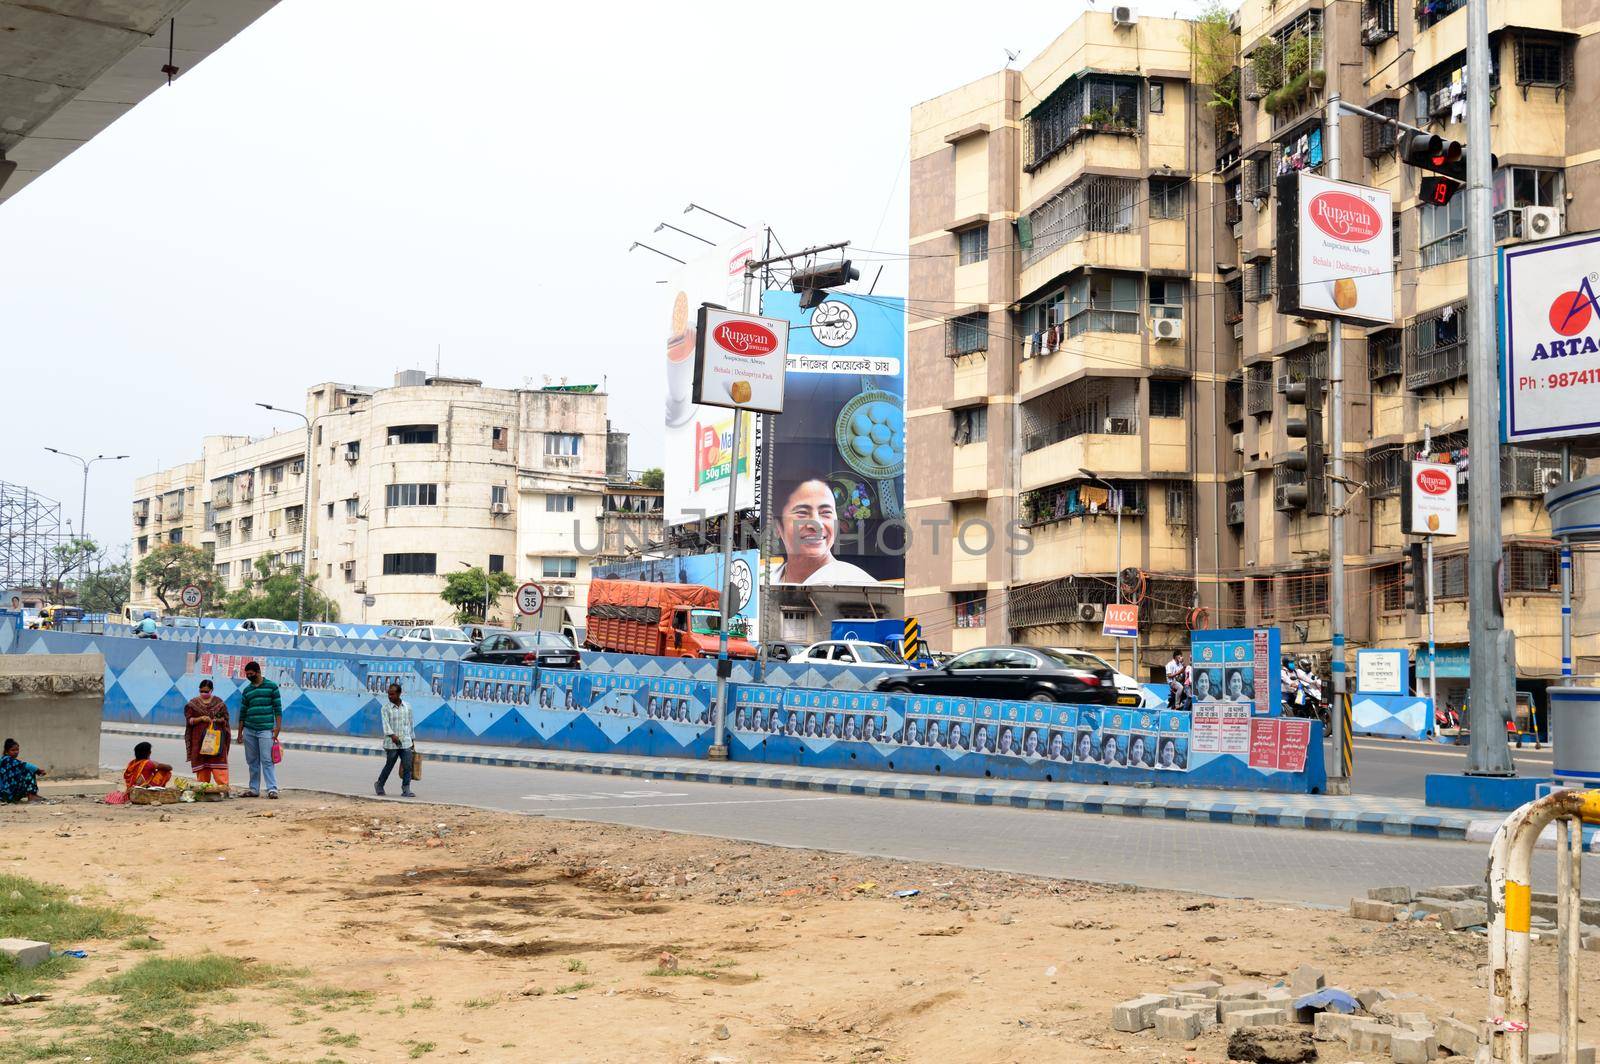 Political hoarding of Mamata Banerjee Trinamool Congress supreme showing Bangla Nijer Meye kei Chay (Bengal wants its own daughter ) in city street of Kolkata West Bengal India 17 April 2021 by sudiptabhowmick